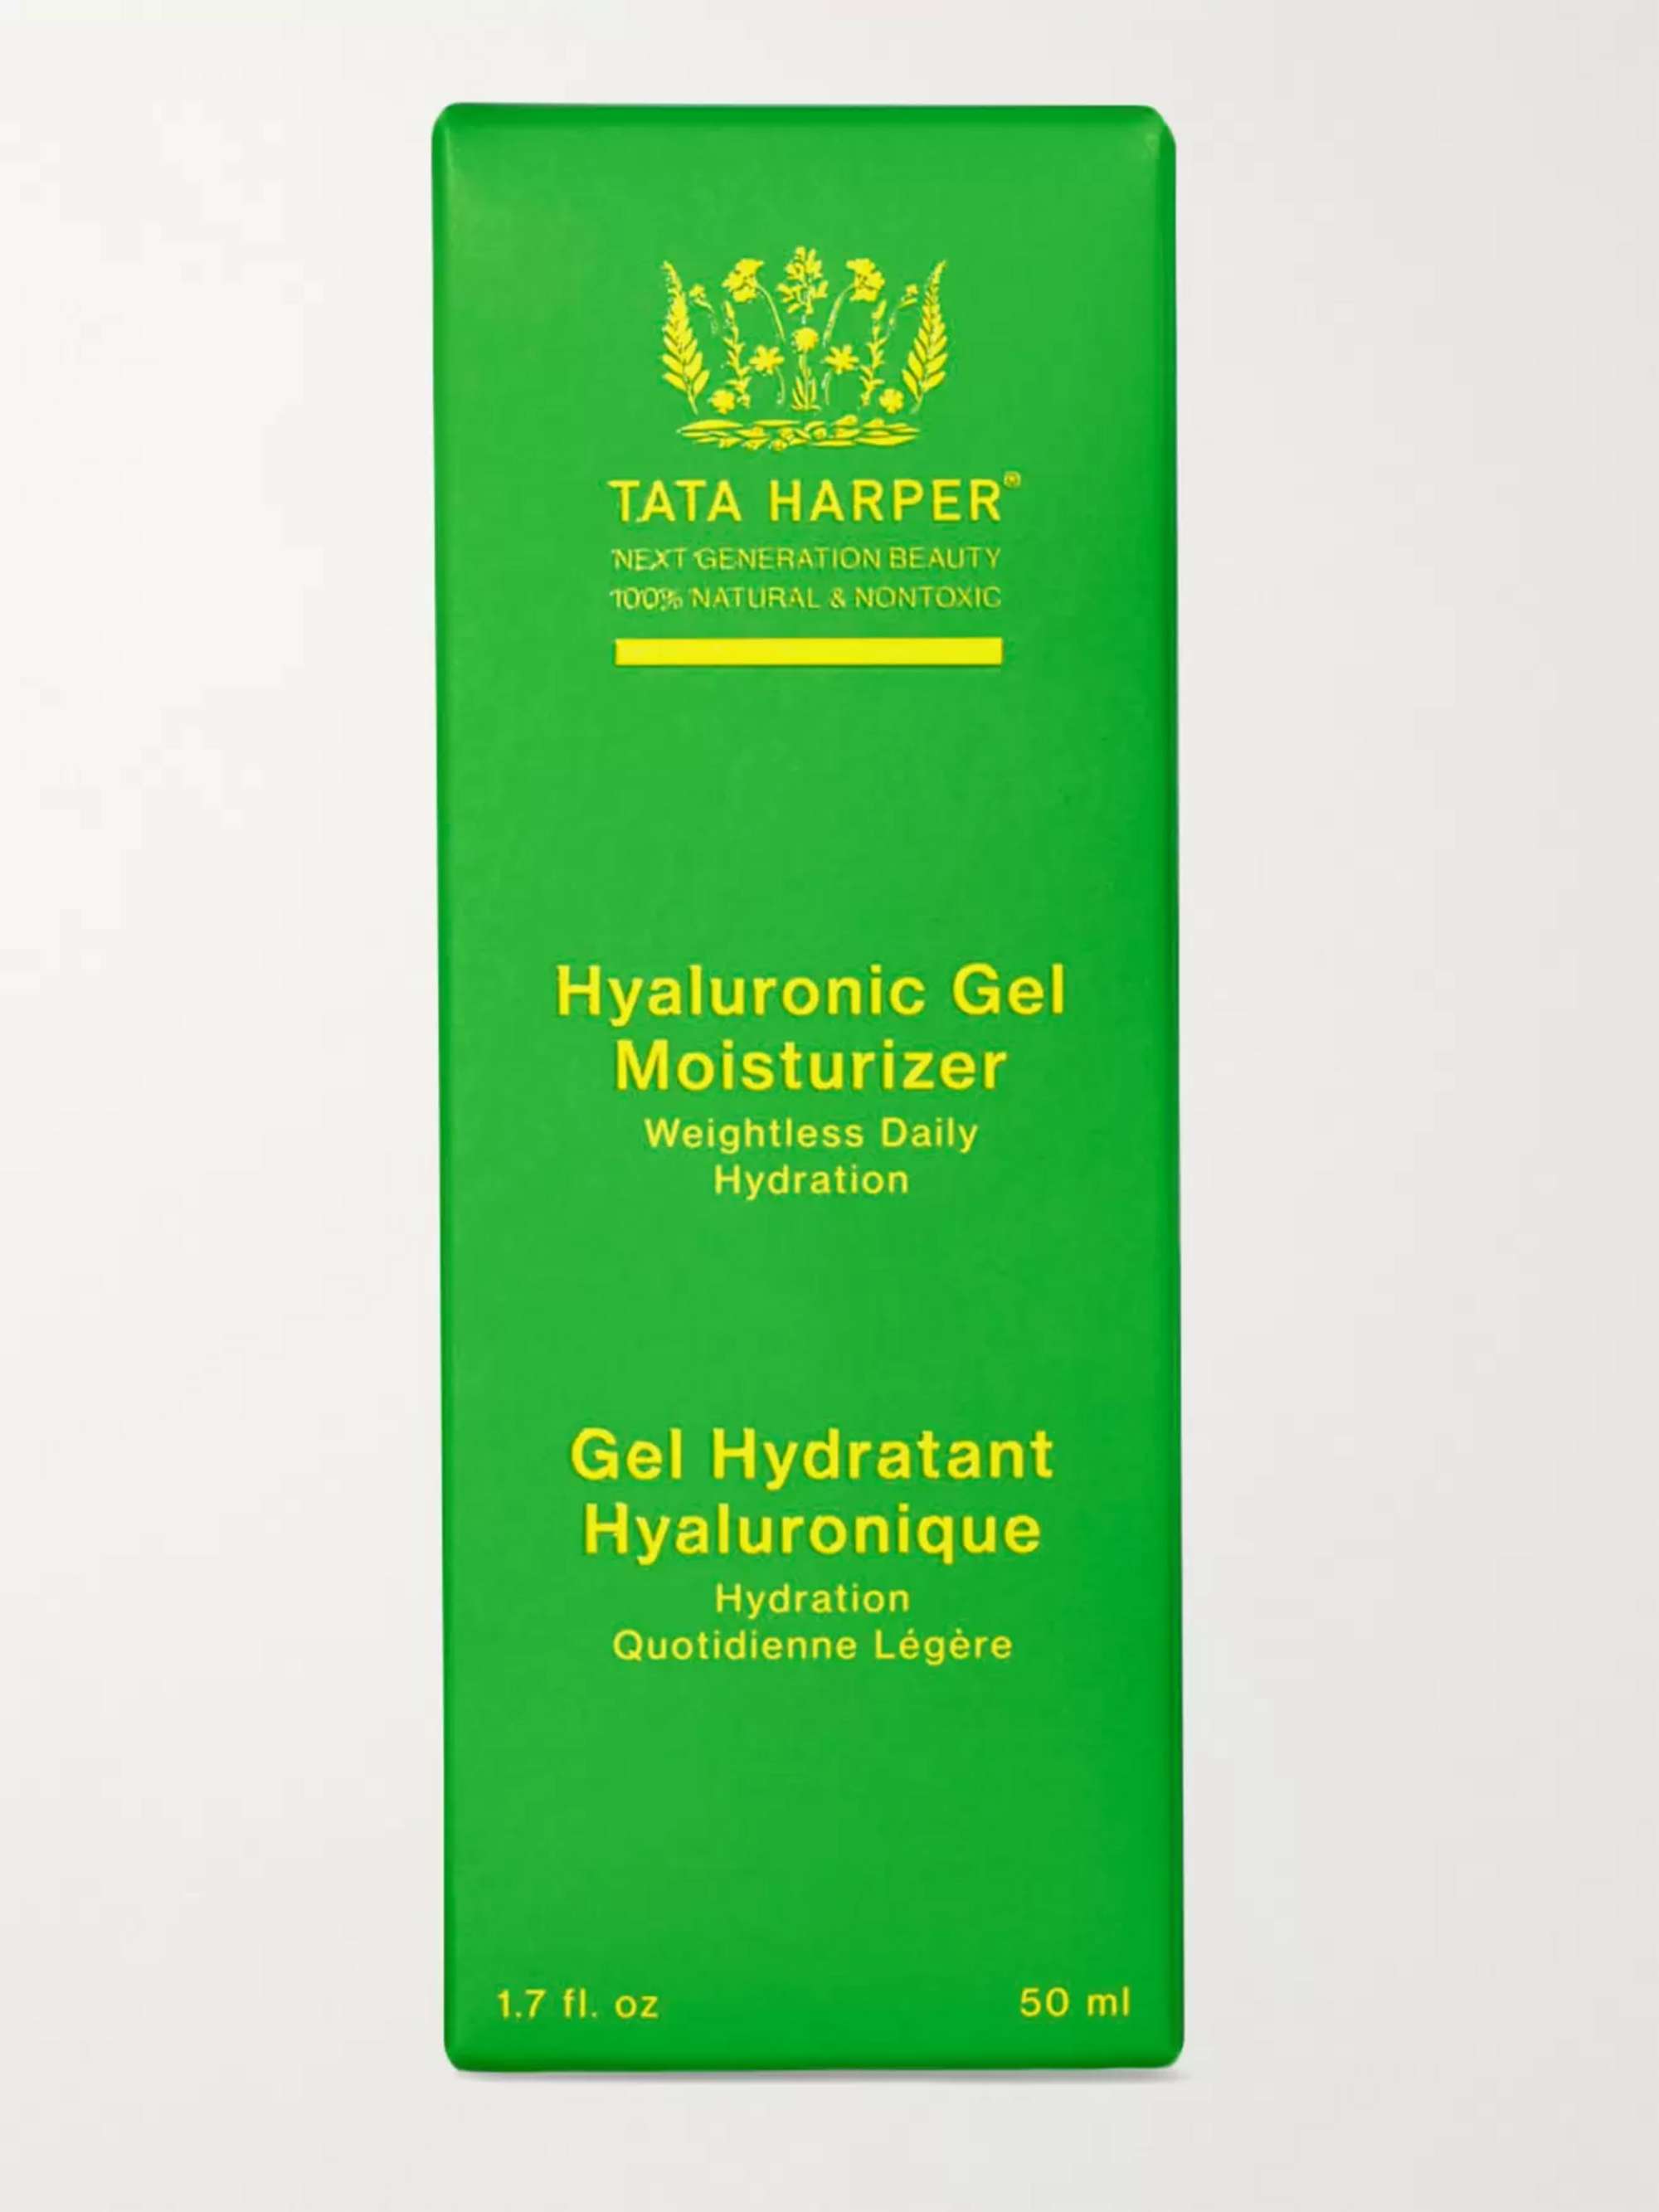 TATA HARPER Hyaluronic Gel Moisturizer, 50ml